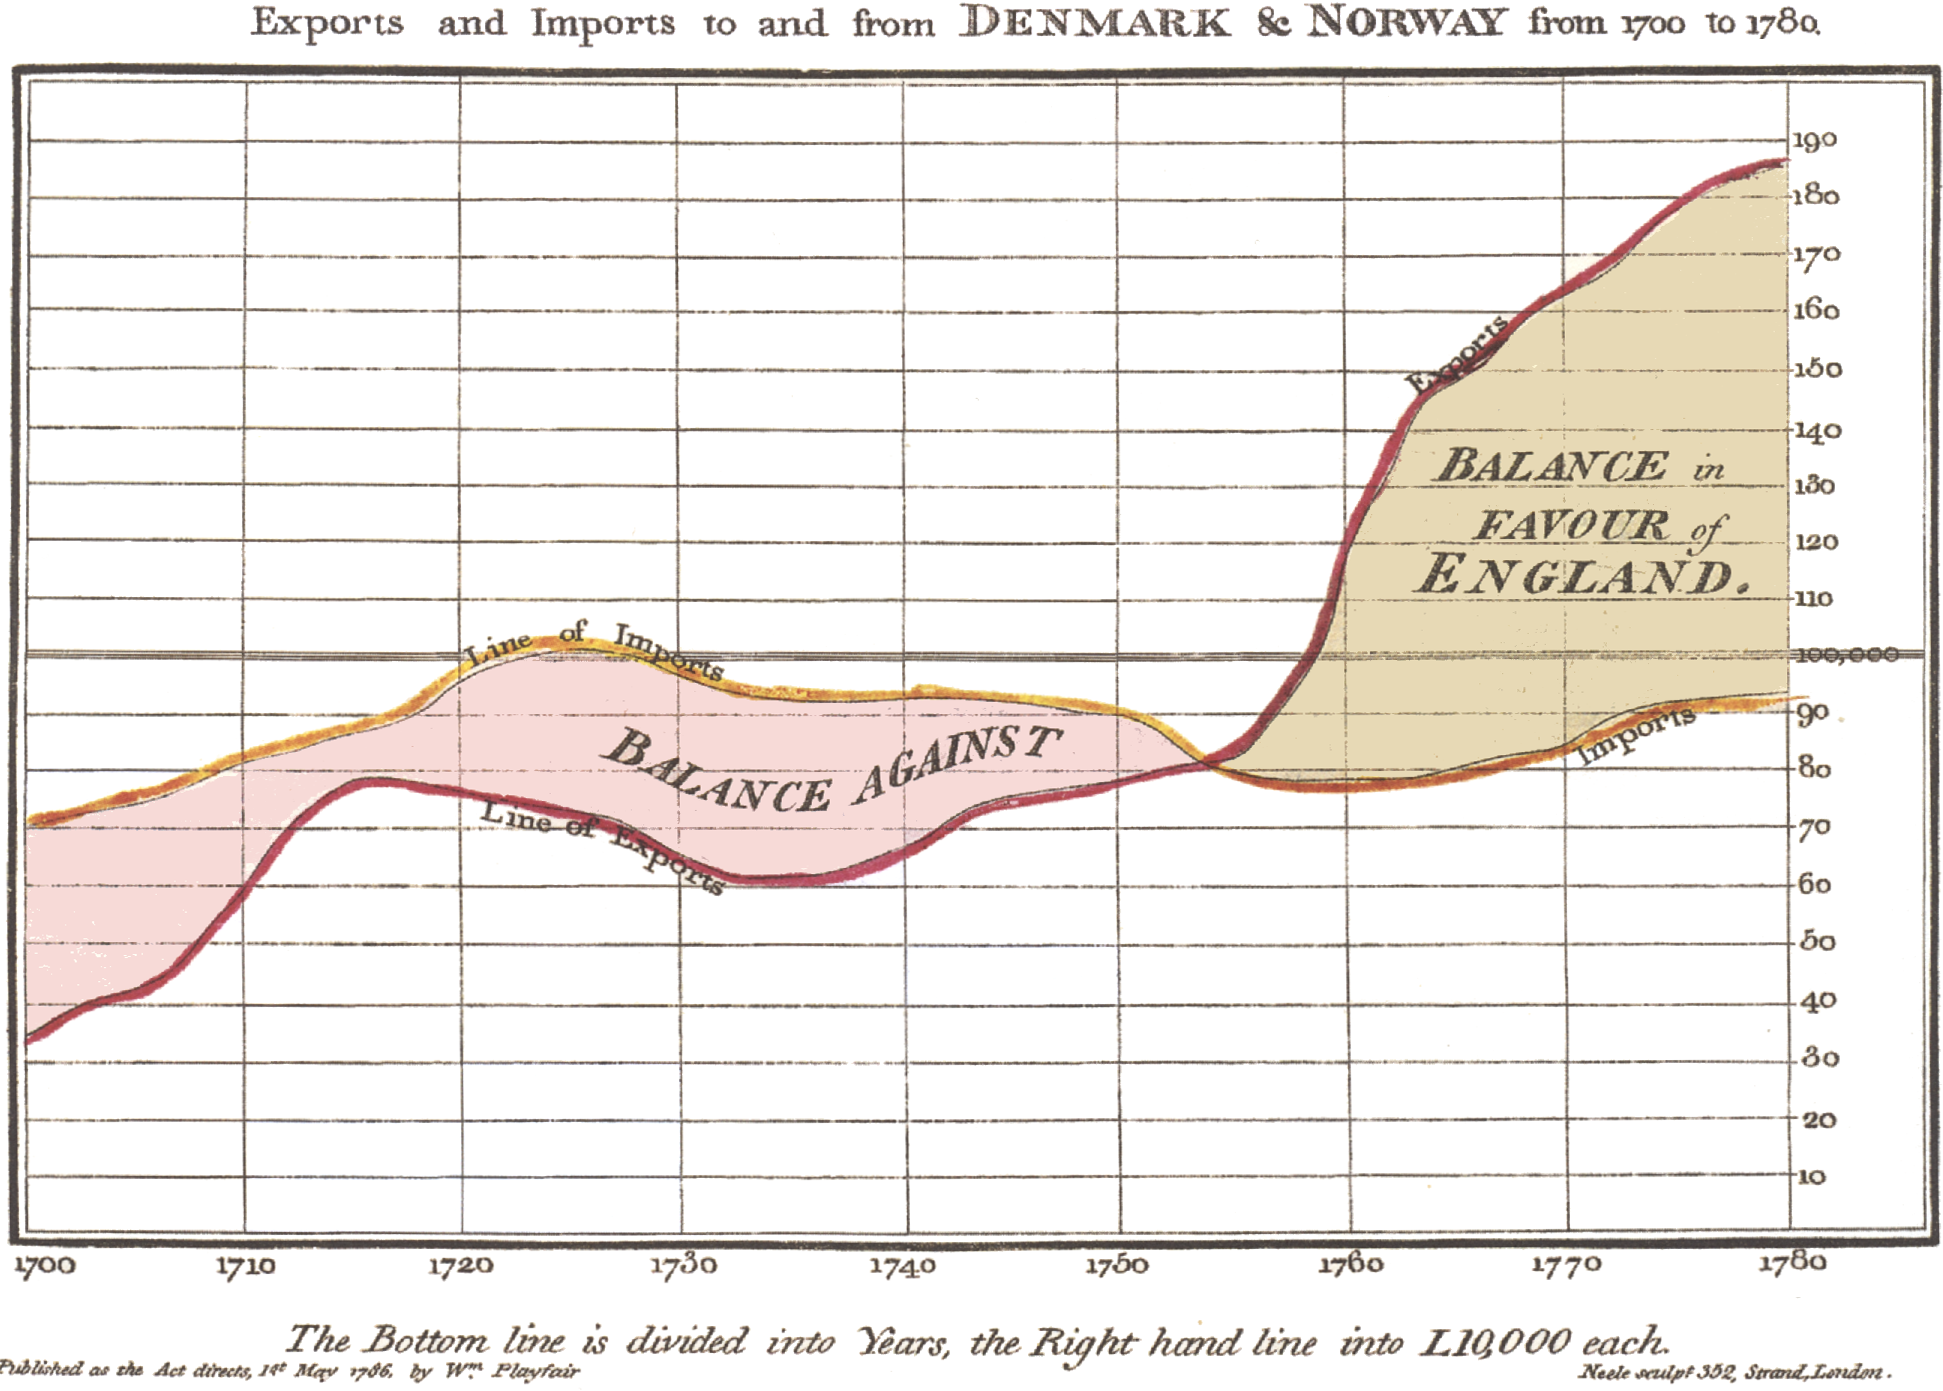 Playfair (1786) 绘制的线图。 这幅图主要展示了 1700 年至 1780 年间英格兰的进出口时序数据，左边表明了对外贸易对英格兰不利，而随着时间发展，大约 1752 年后，对外贸易逐渐变得有利。图片来源： https://en.wikipedia.org/wiki/William_Playfair